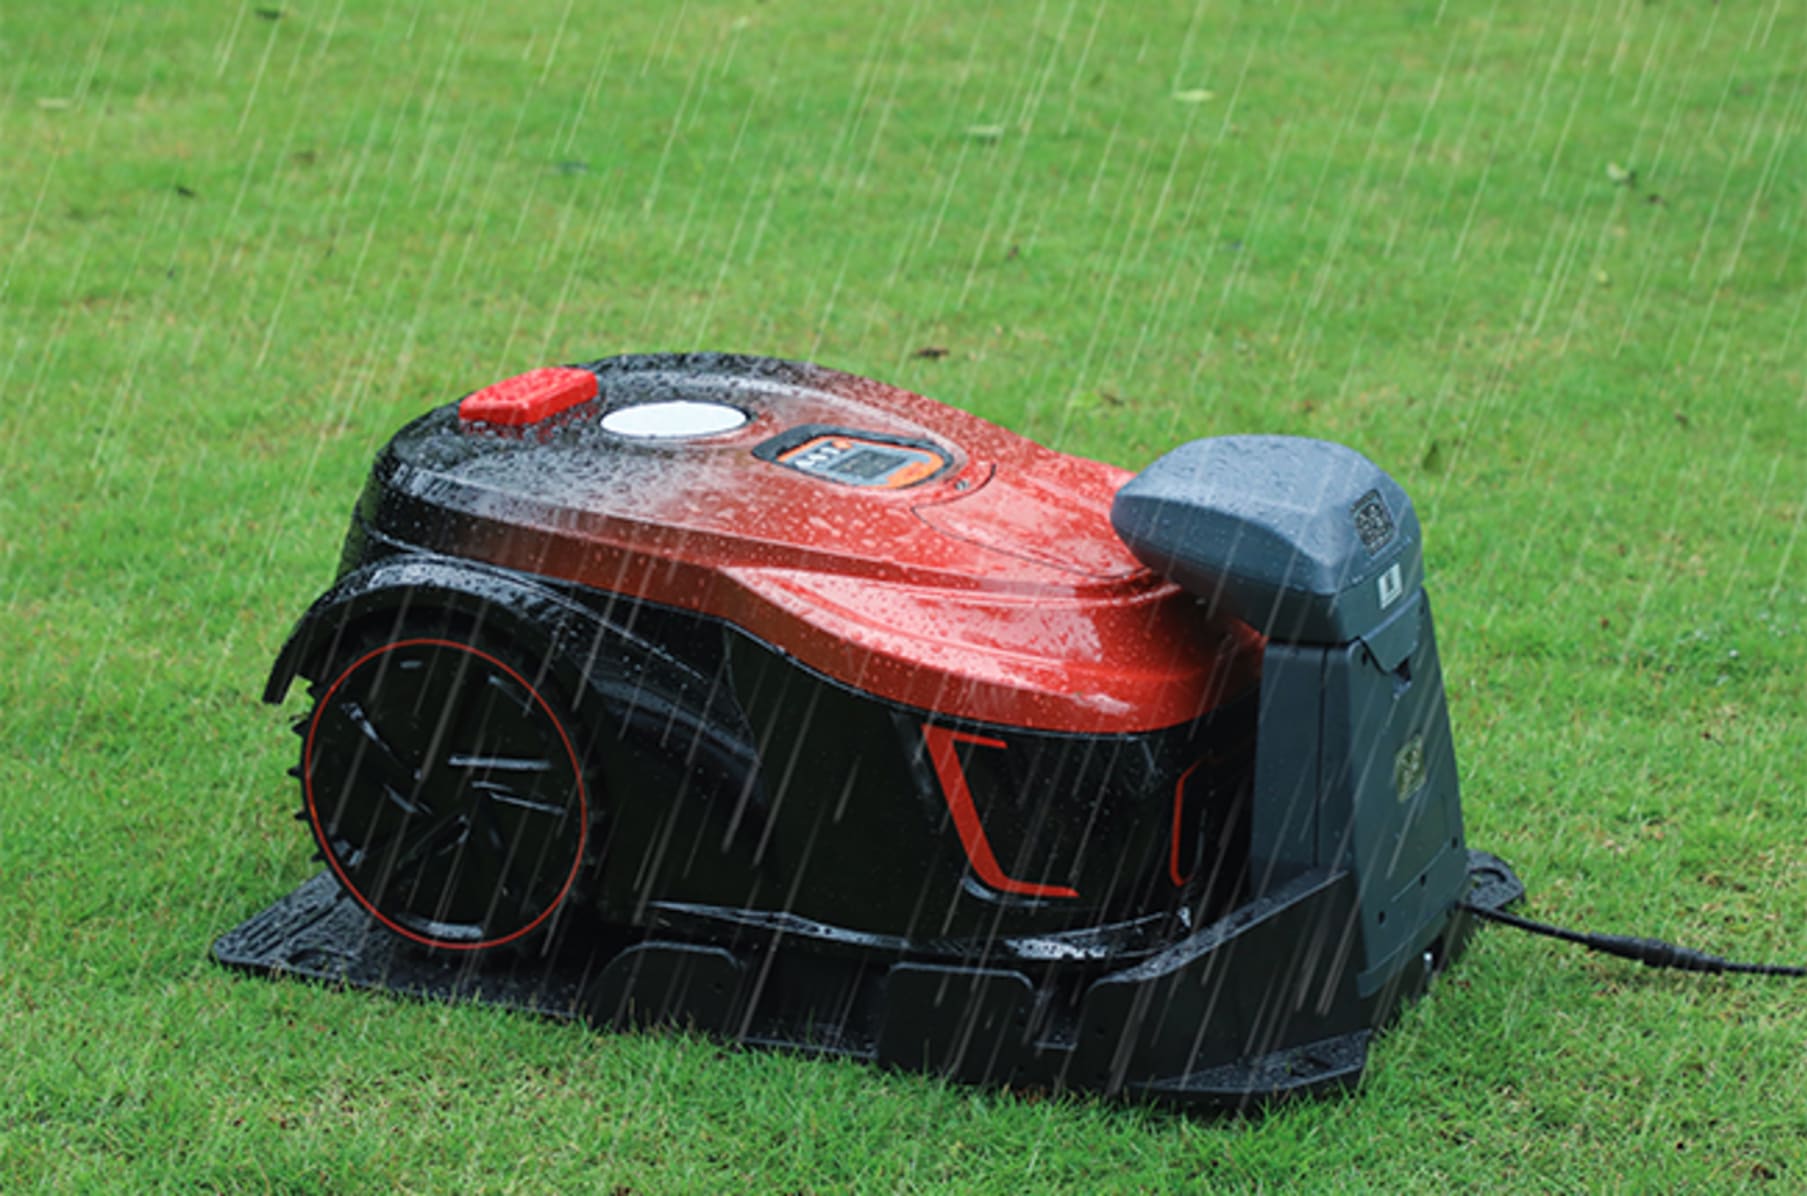 KOWOLL M28E: 3D LiDAR SLAM & RTK Robot Lawn Mower | Indiegogo